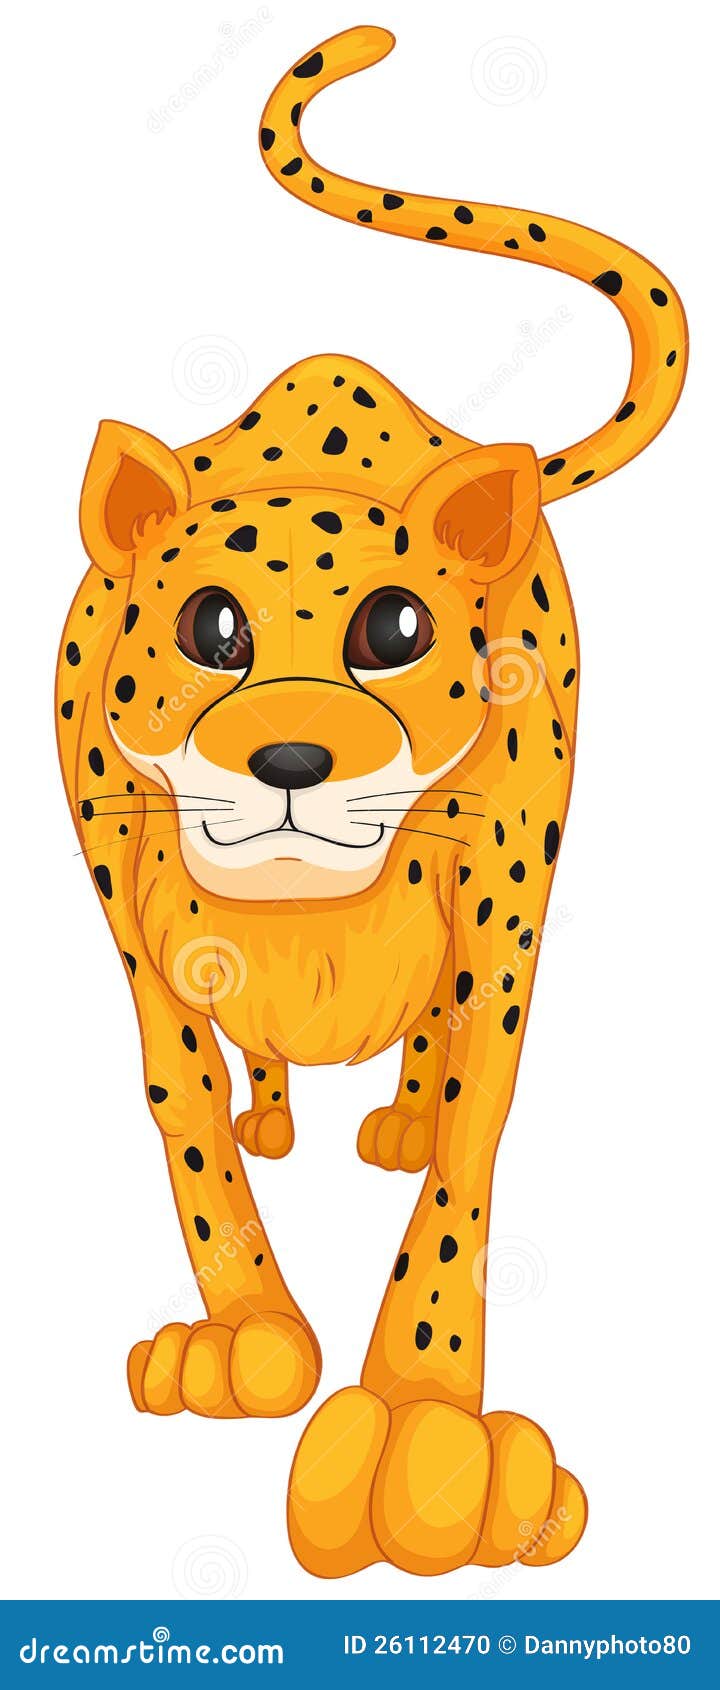 Cheetah stock vector. Illustration of graphic, feline - 26112470